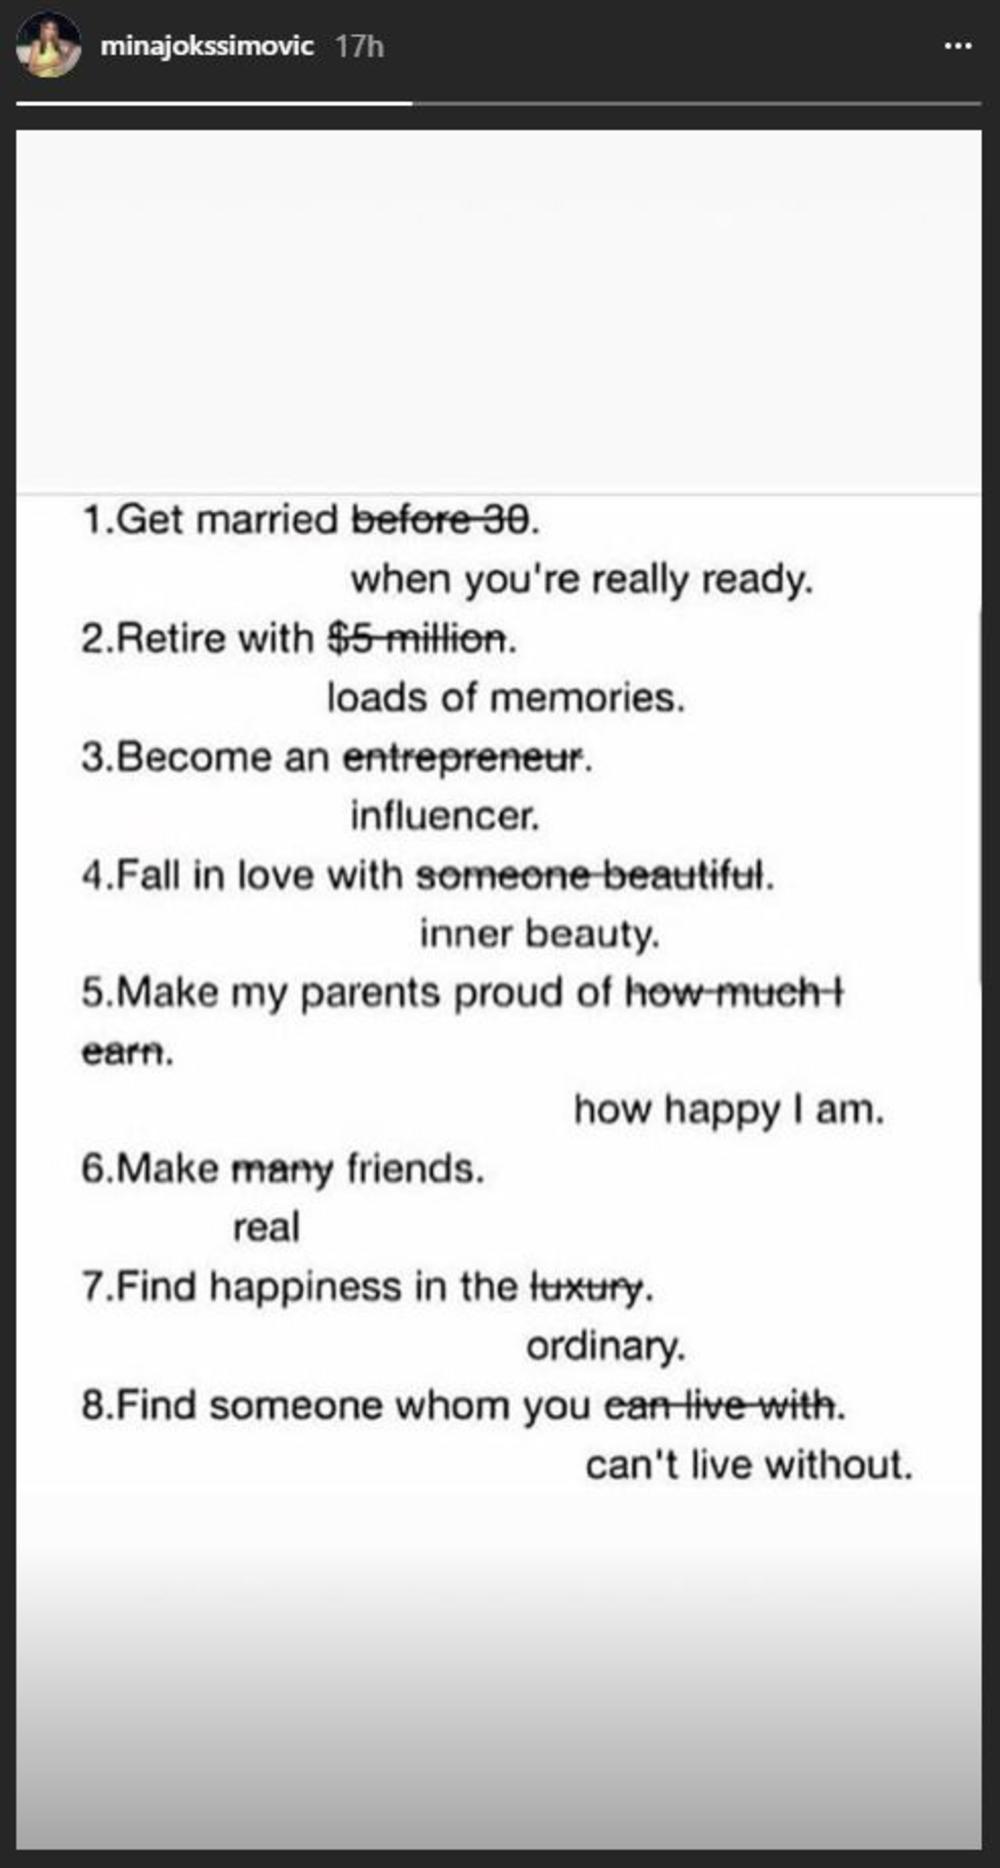 Spisak stvari za sreću objavila je na svom Instagram profilu  